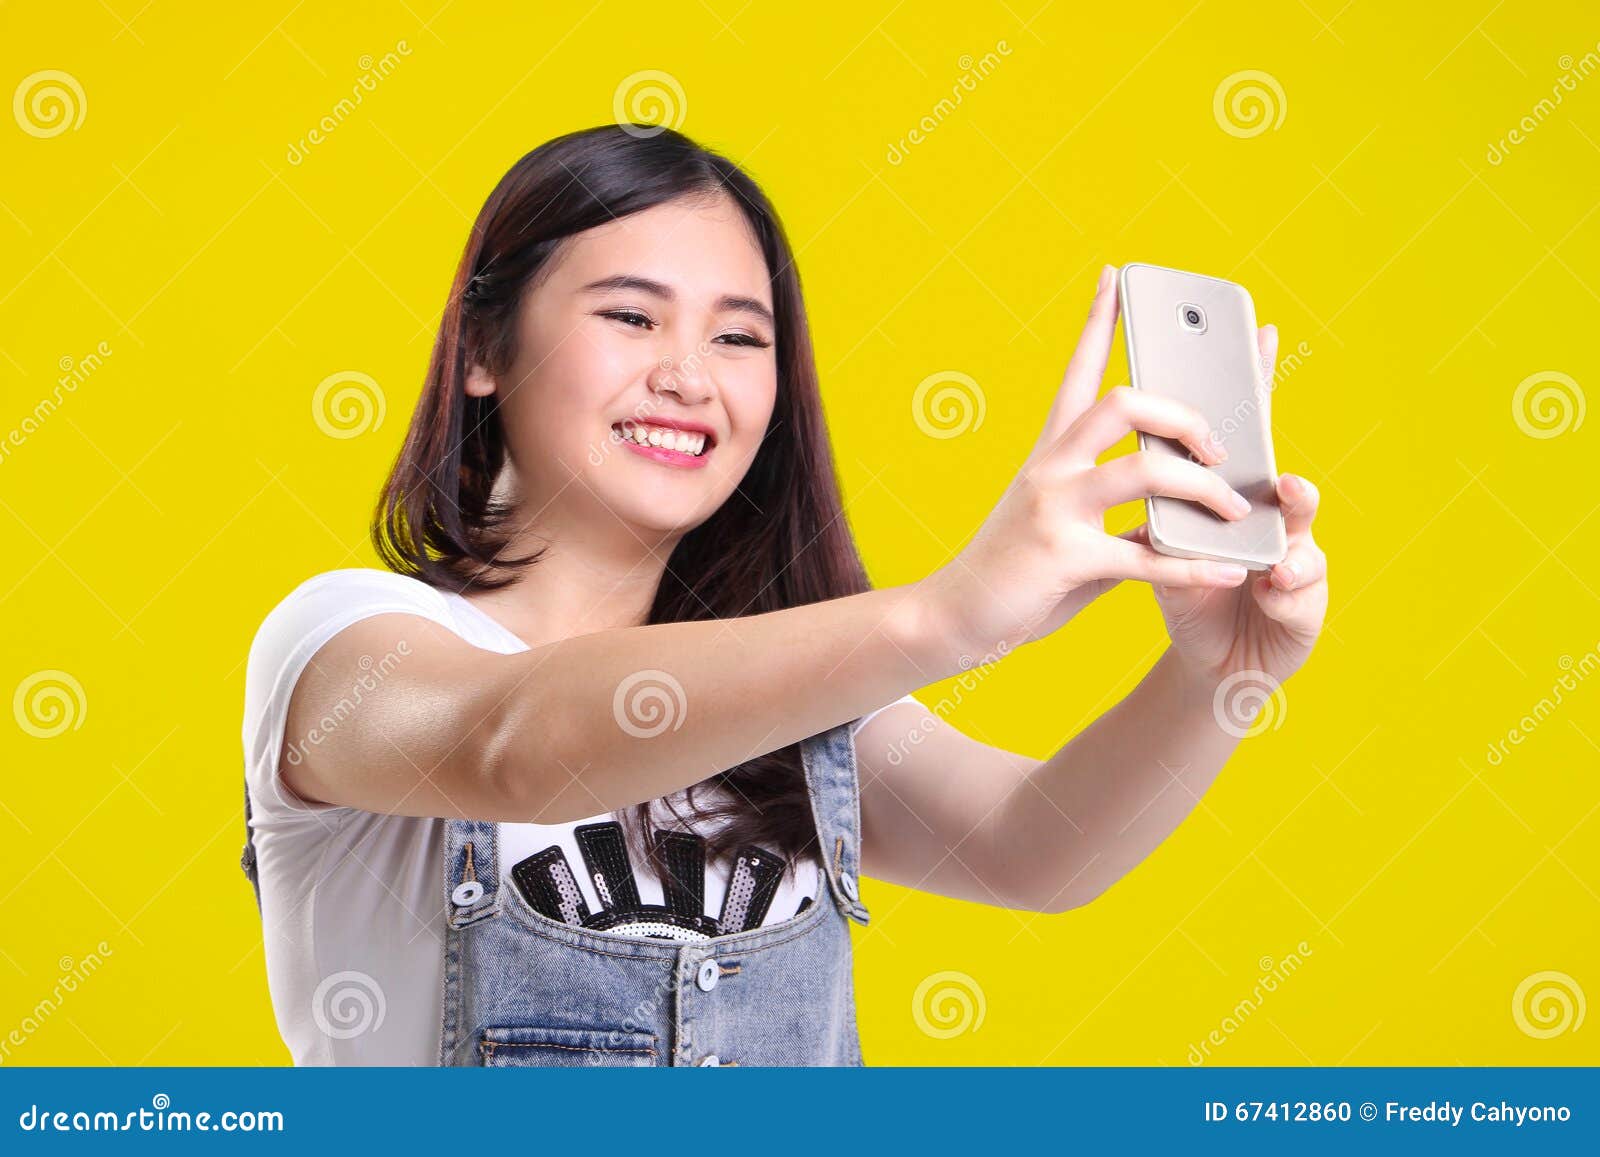 Self shot teen girl selfie